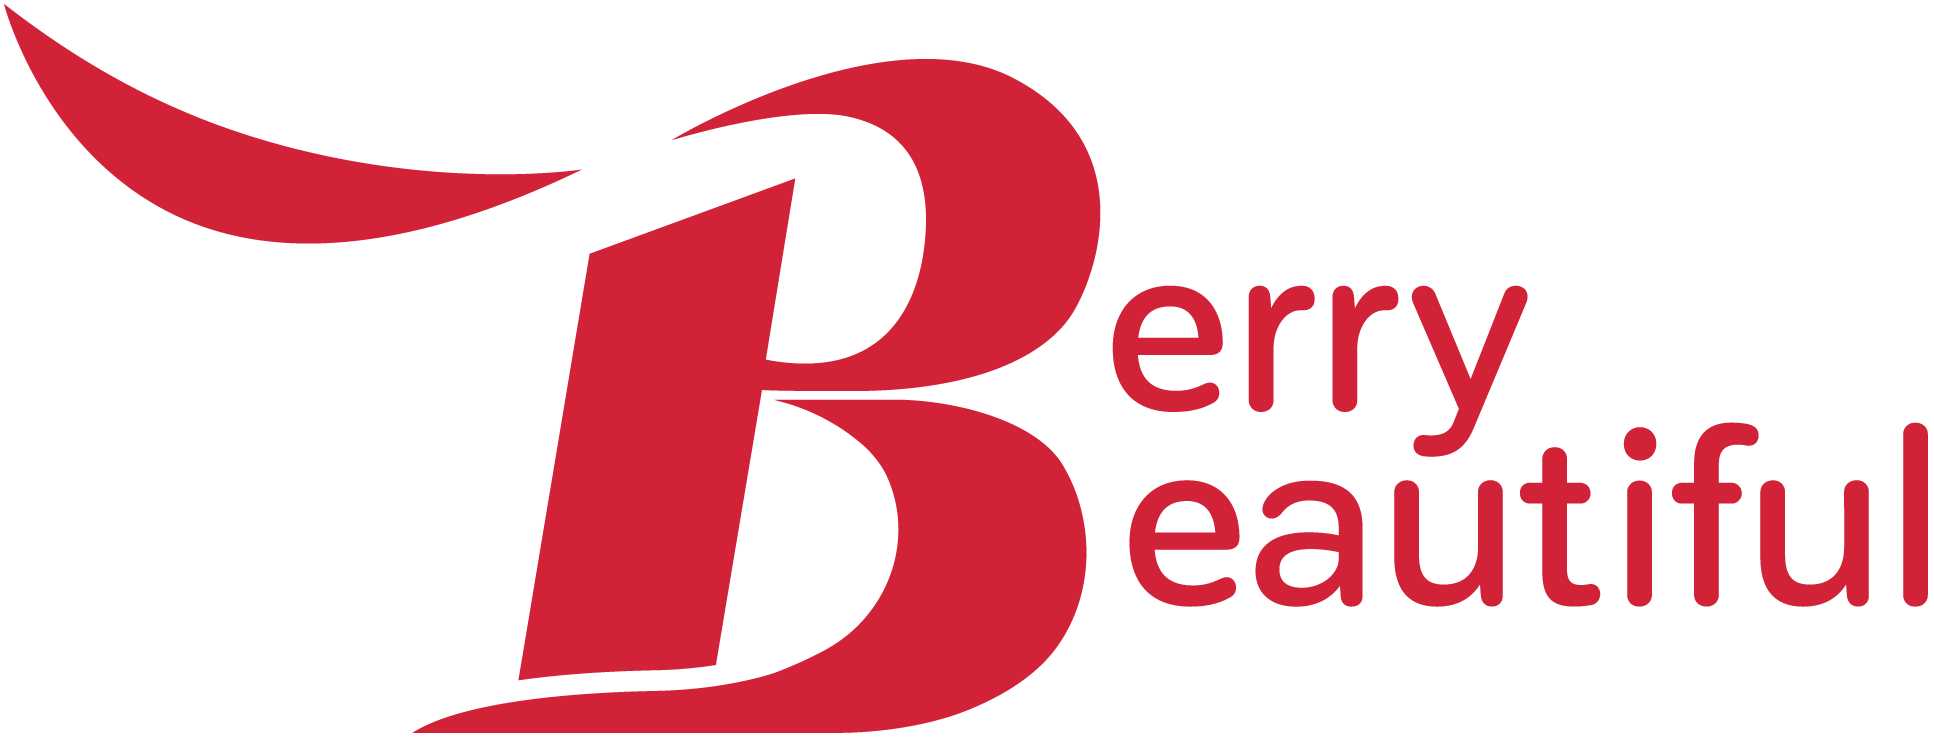 Berry Beautiful Logo